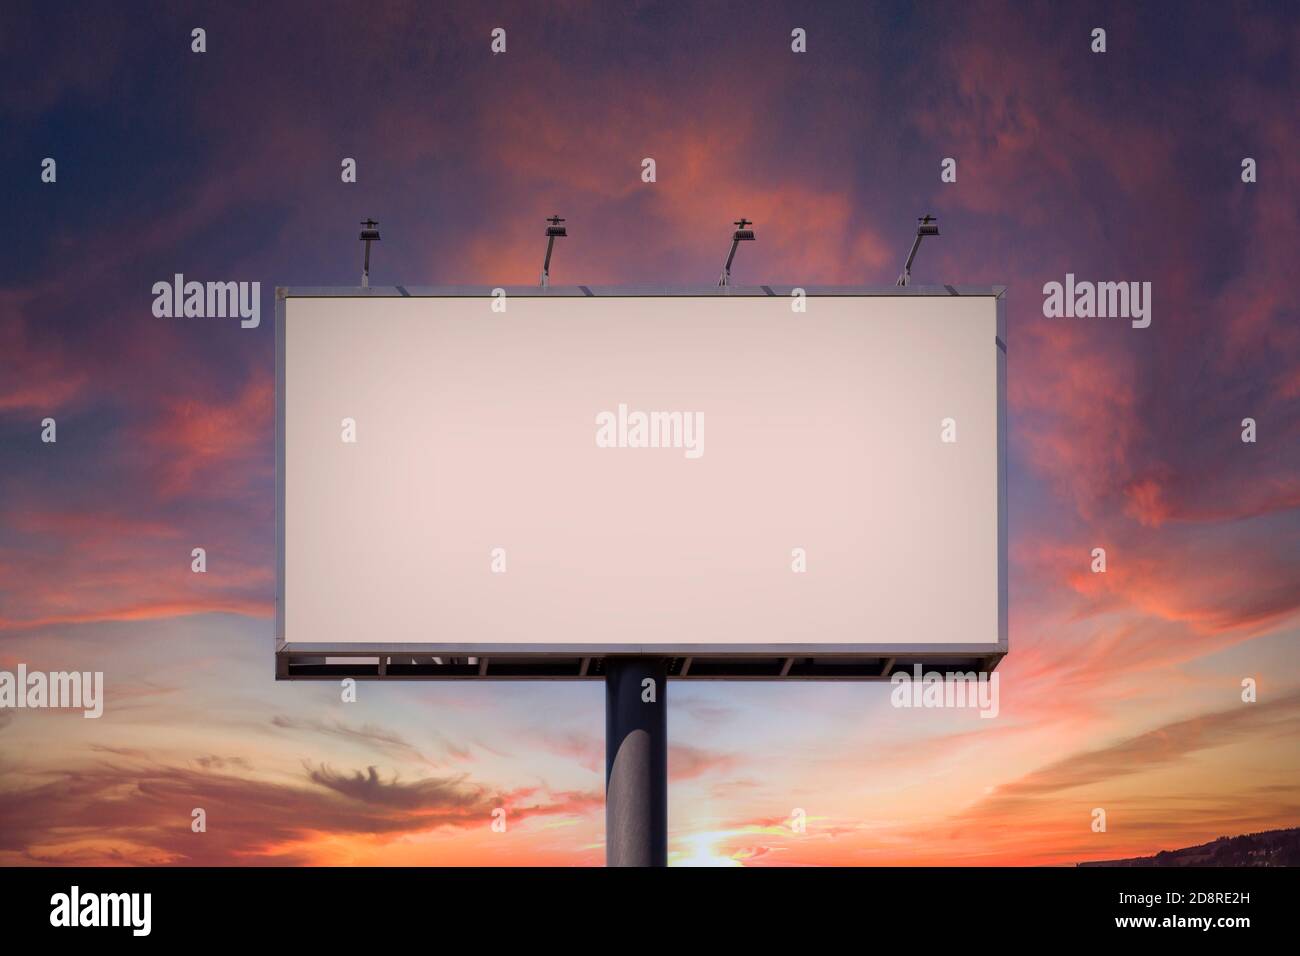 Blank billboard mock up for advertising, against blue sky Stock Photo